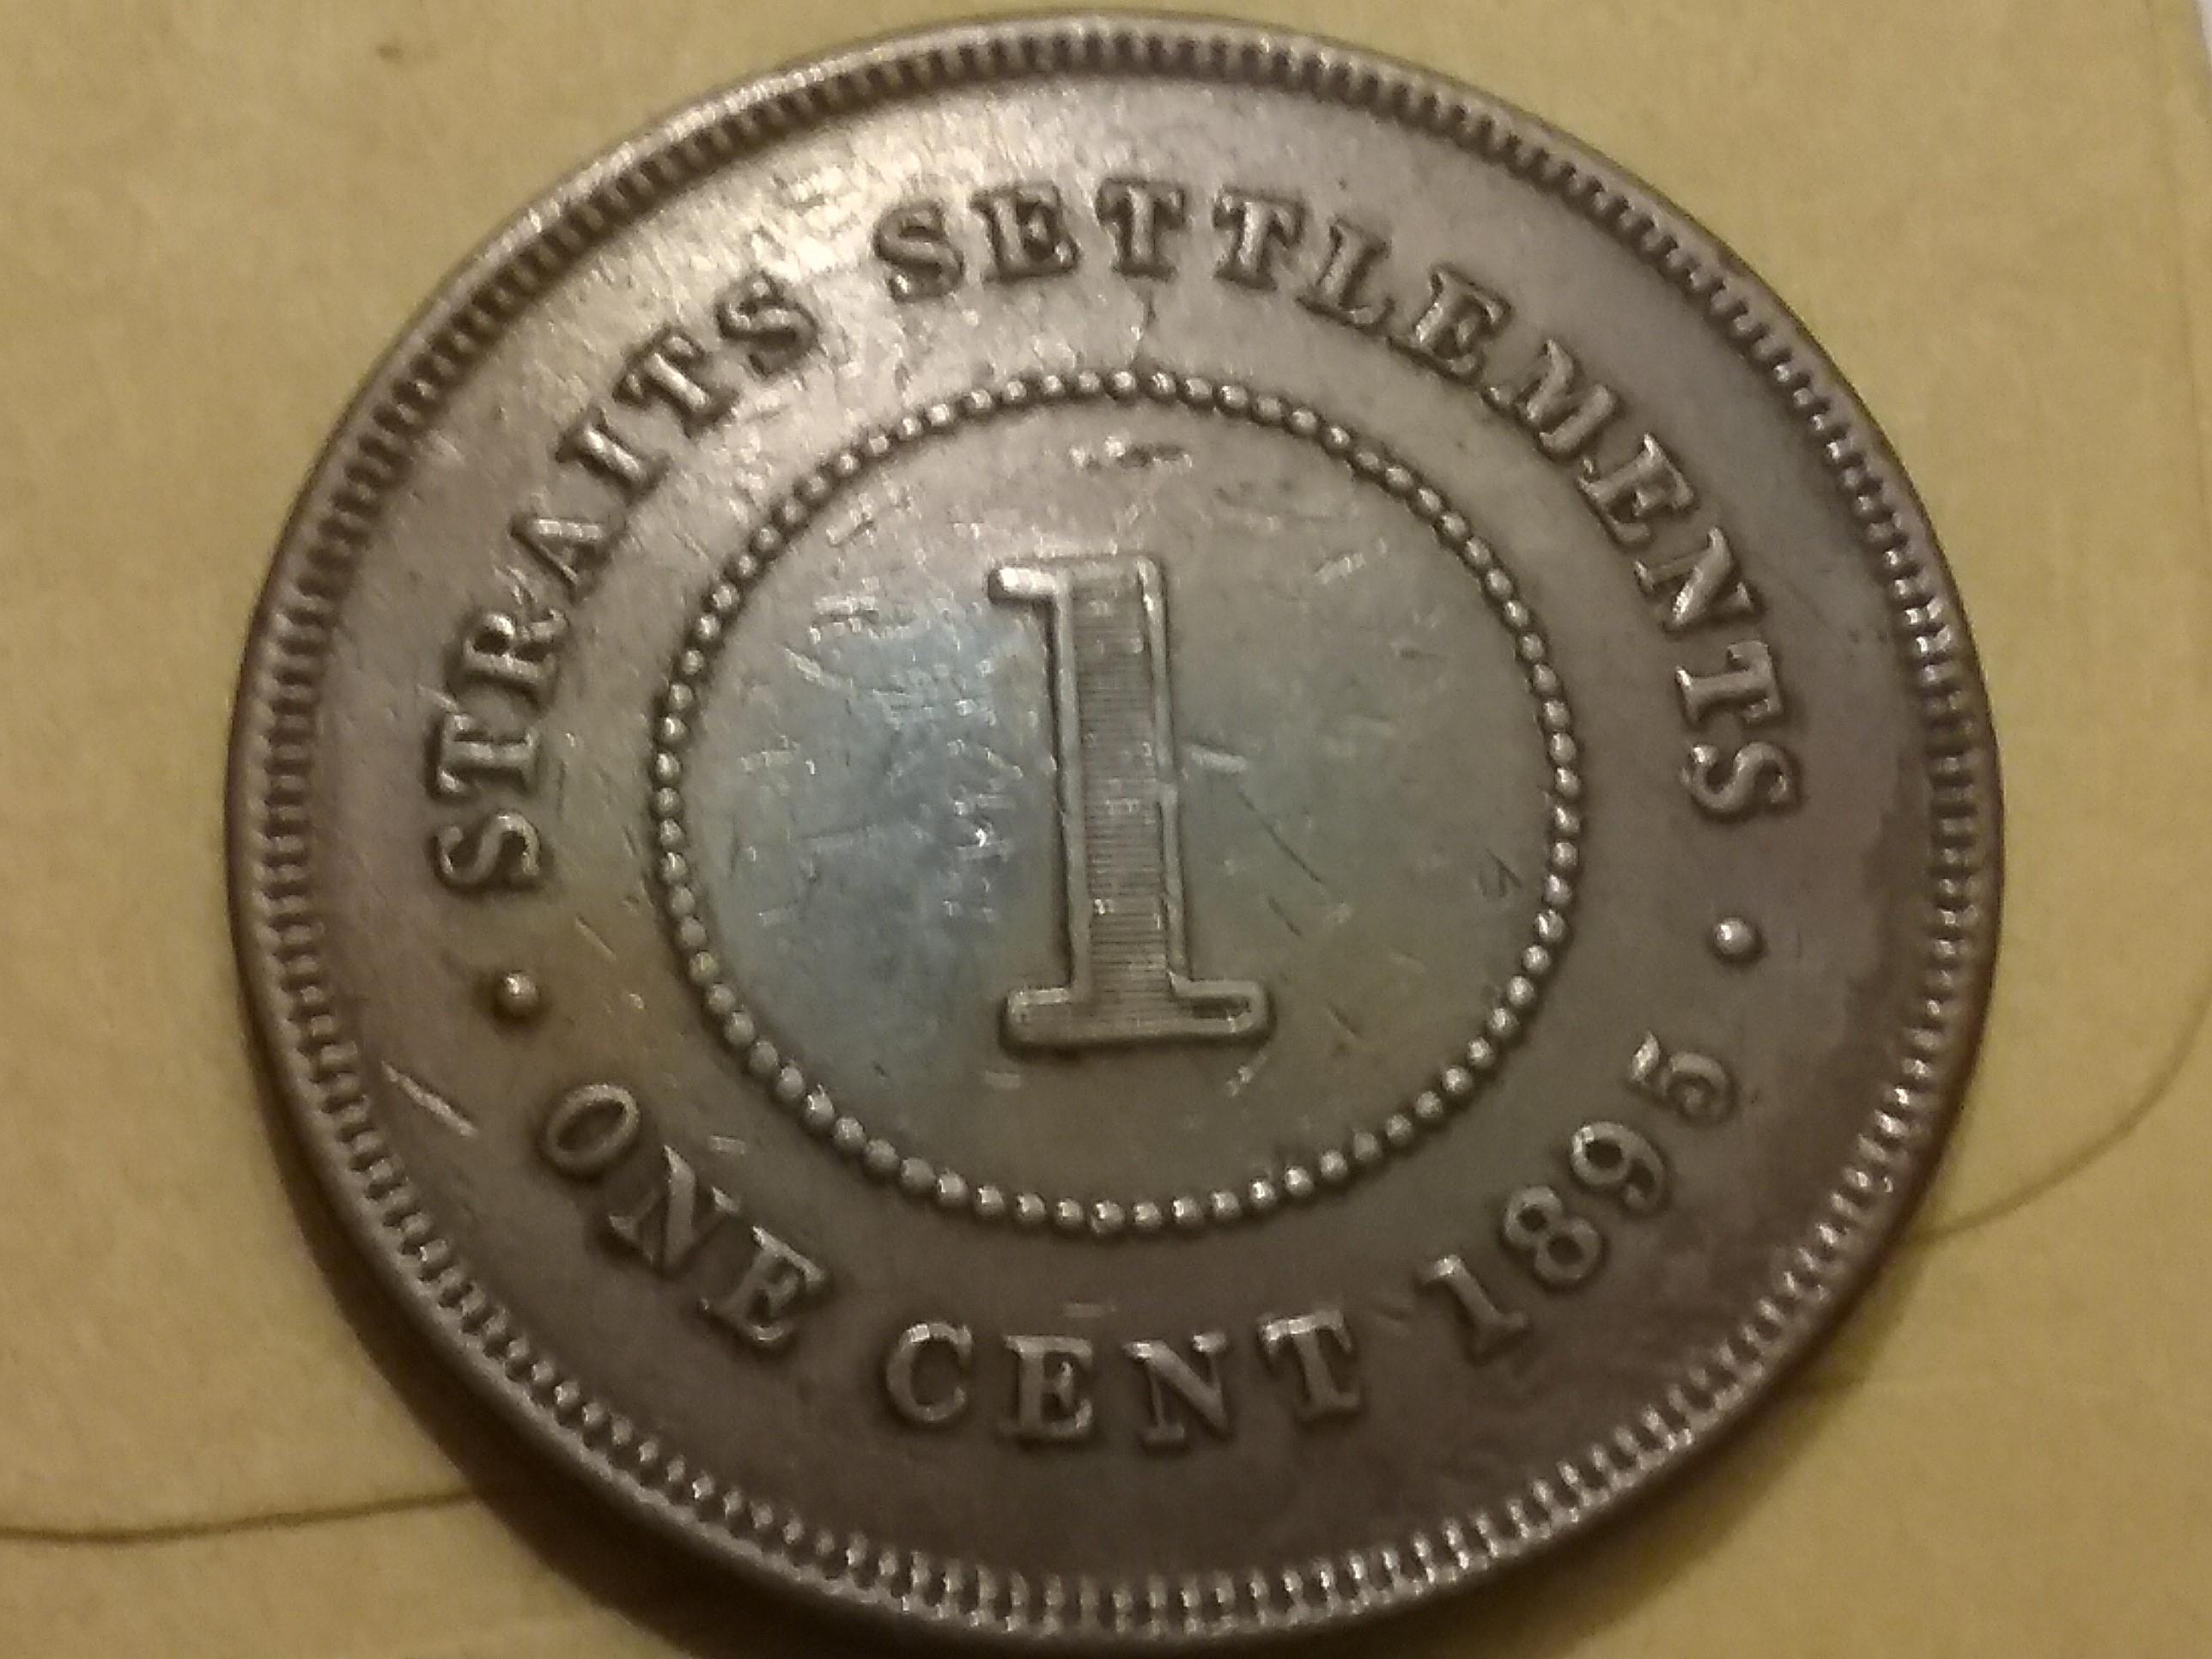 1895 Straits Settlements 1 cent copper looks XF